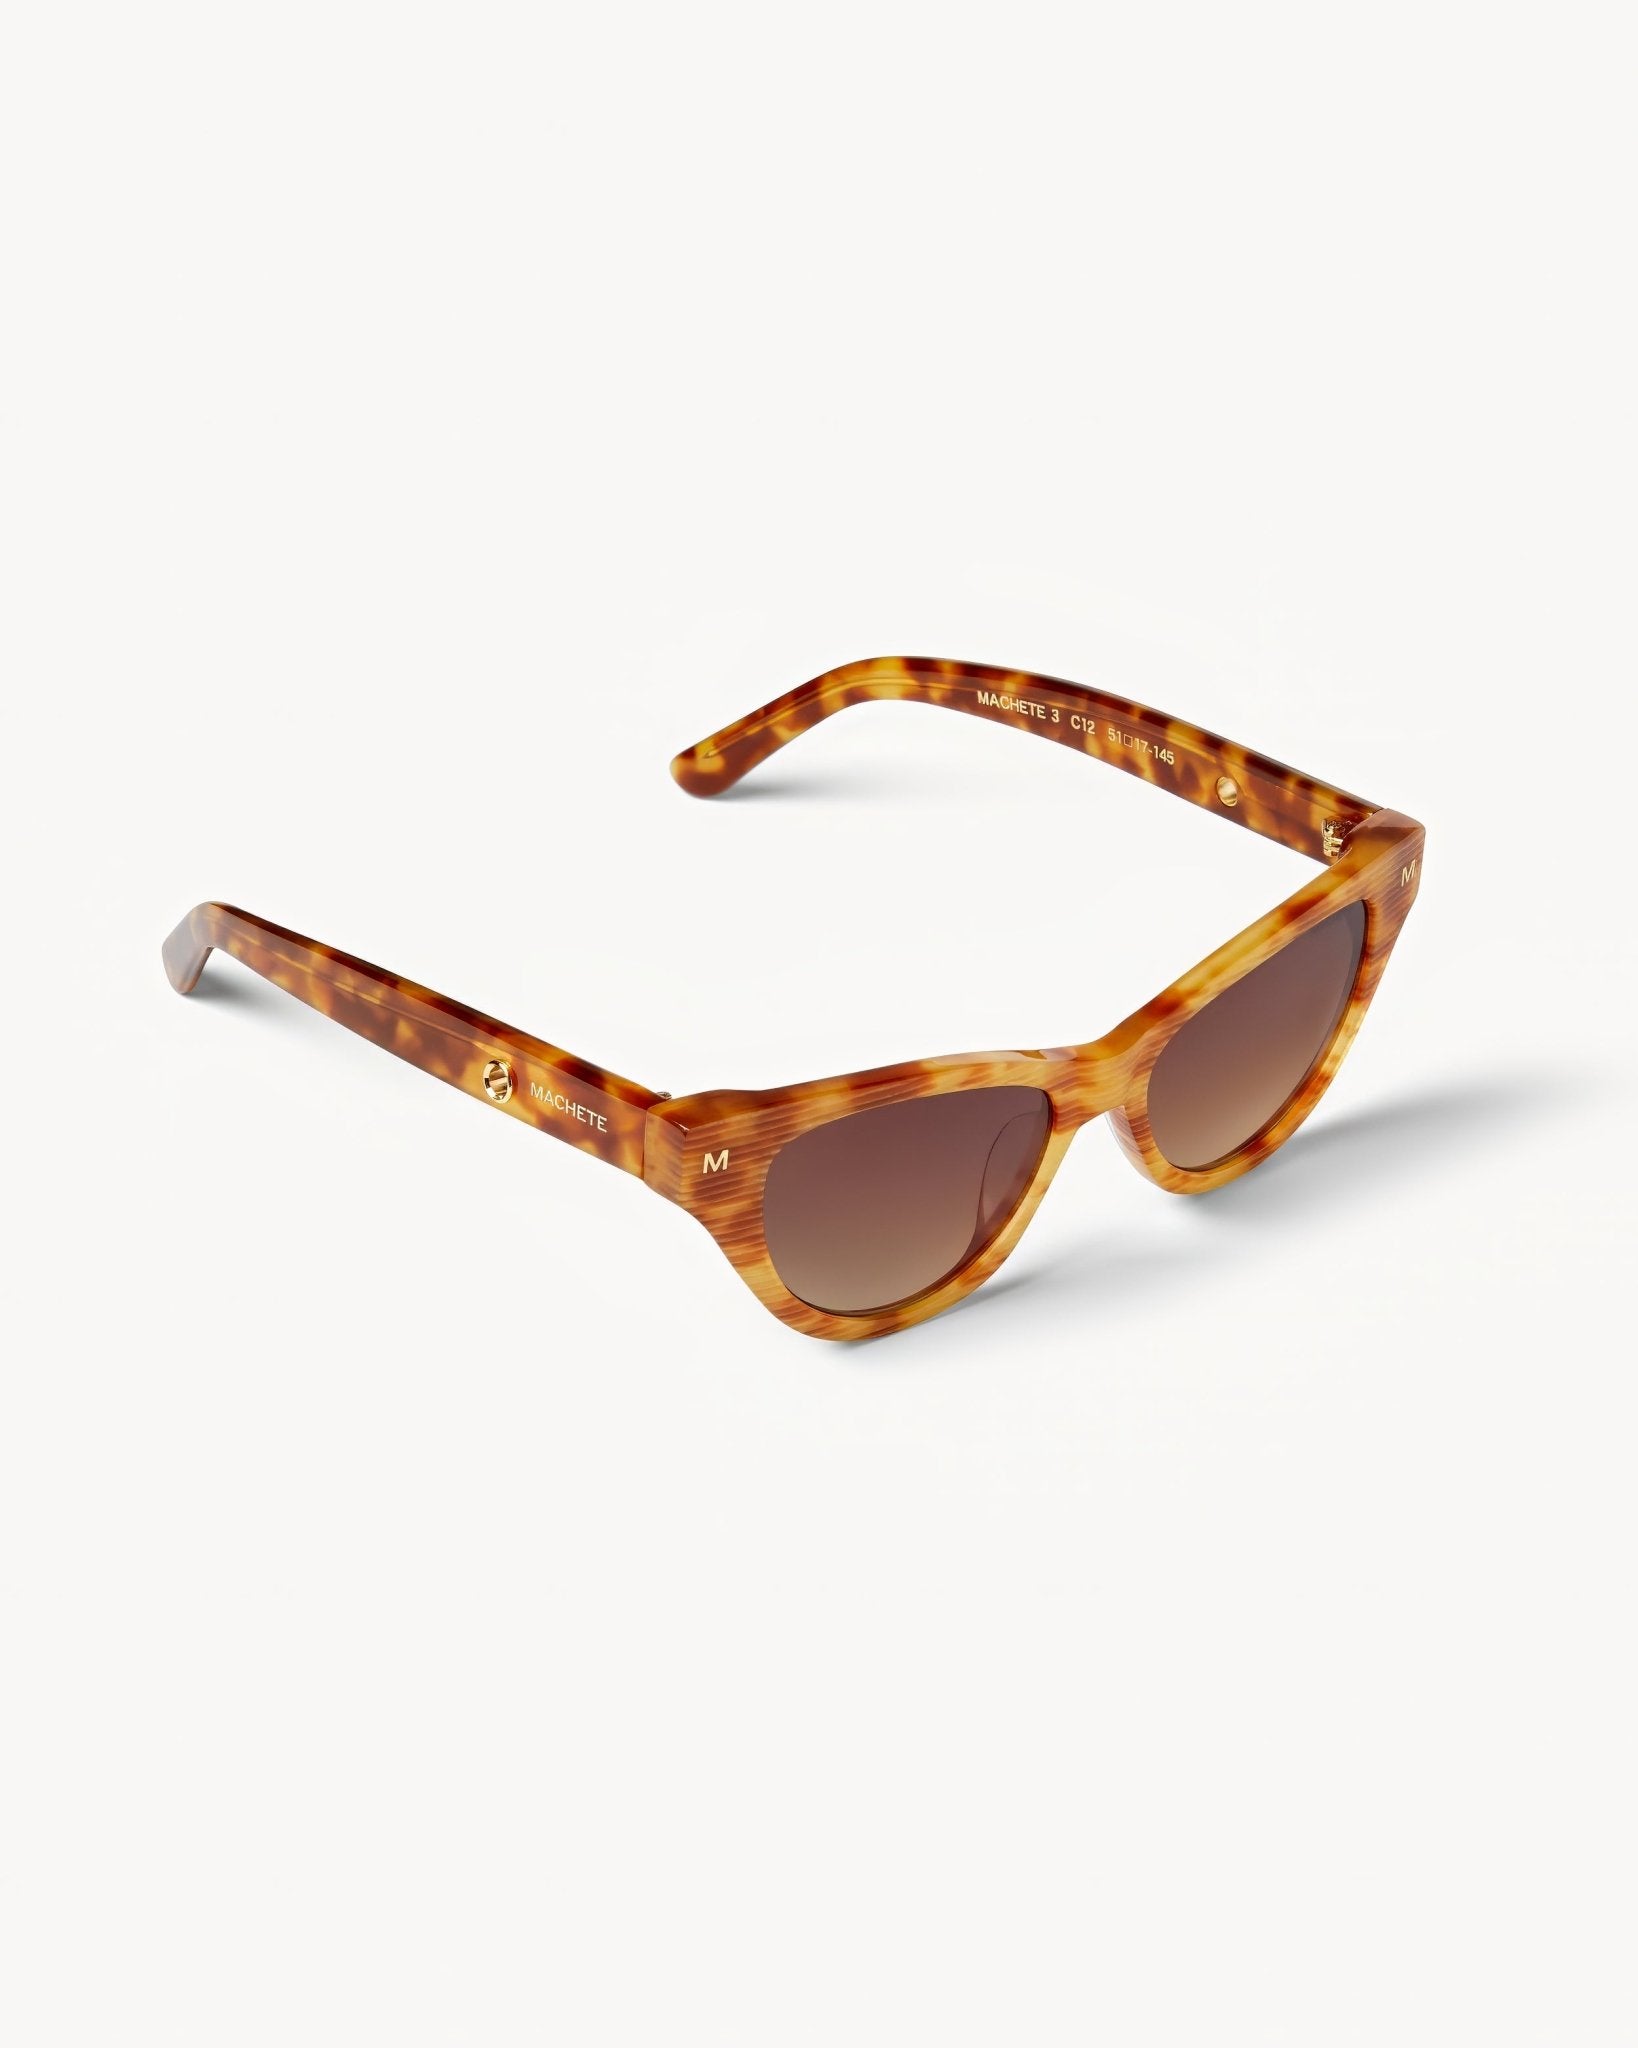 MACHETE Suzy Sunglasses in Light Tortoise Stripe